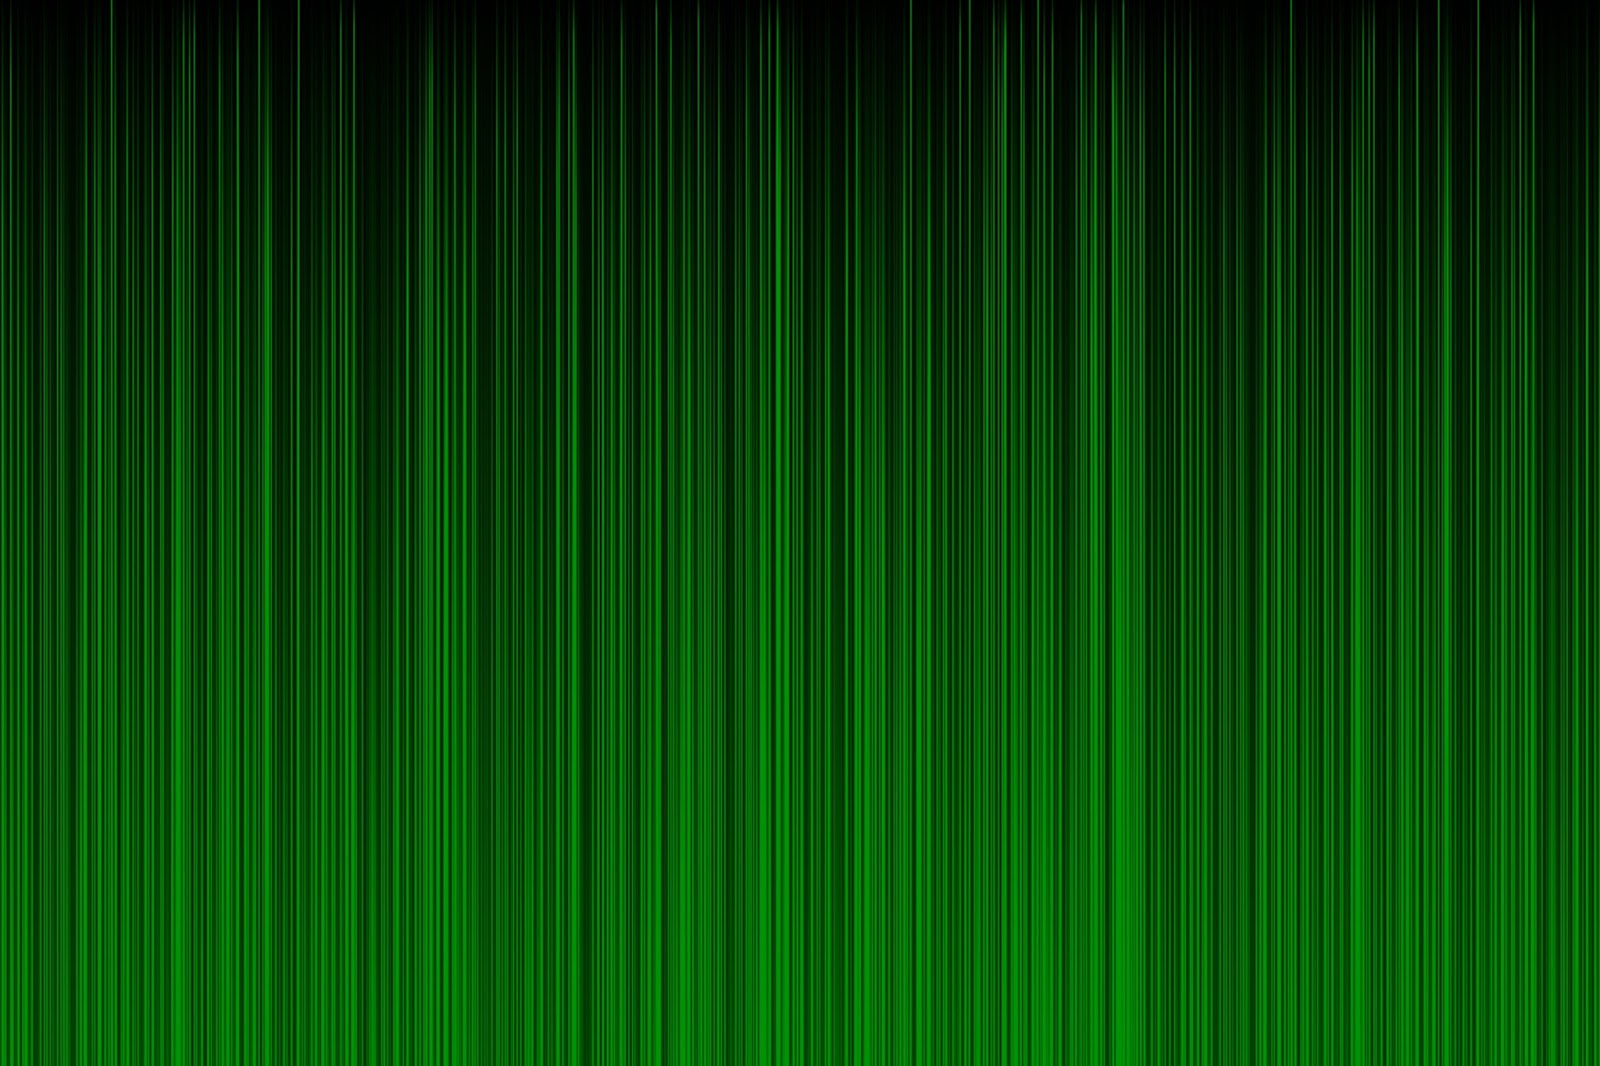 fondo de pantalla warna hijau,verde,hoja,línea,textil,modelo